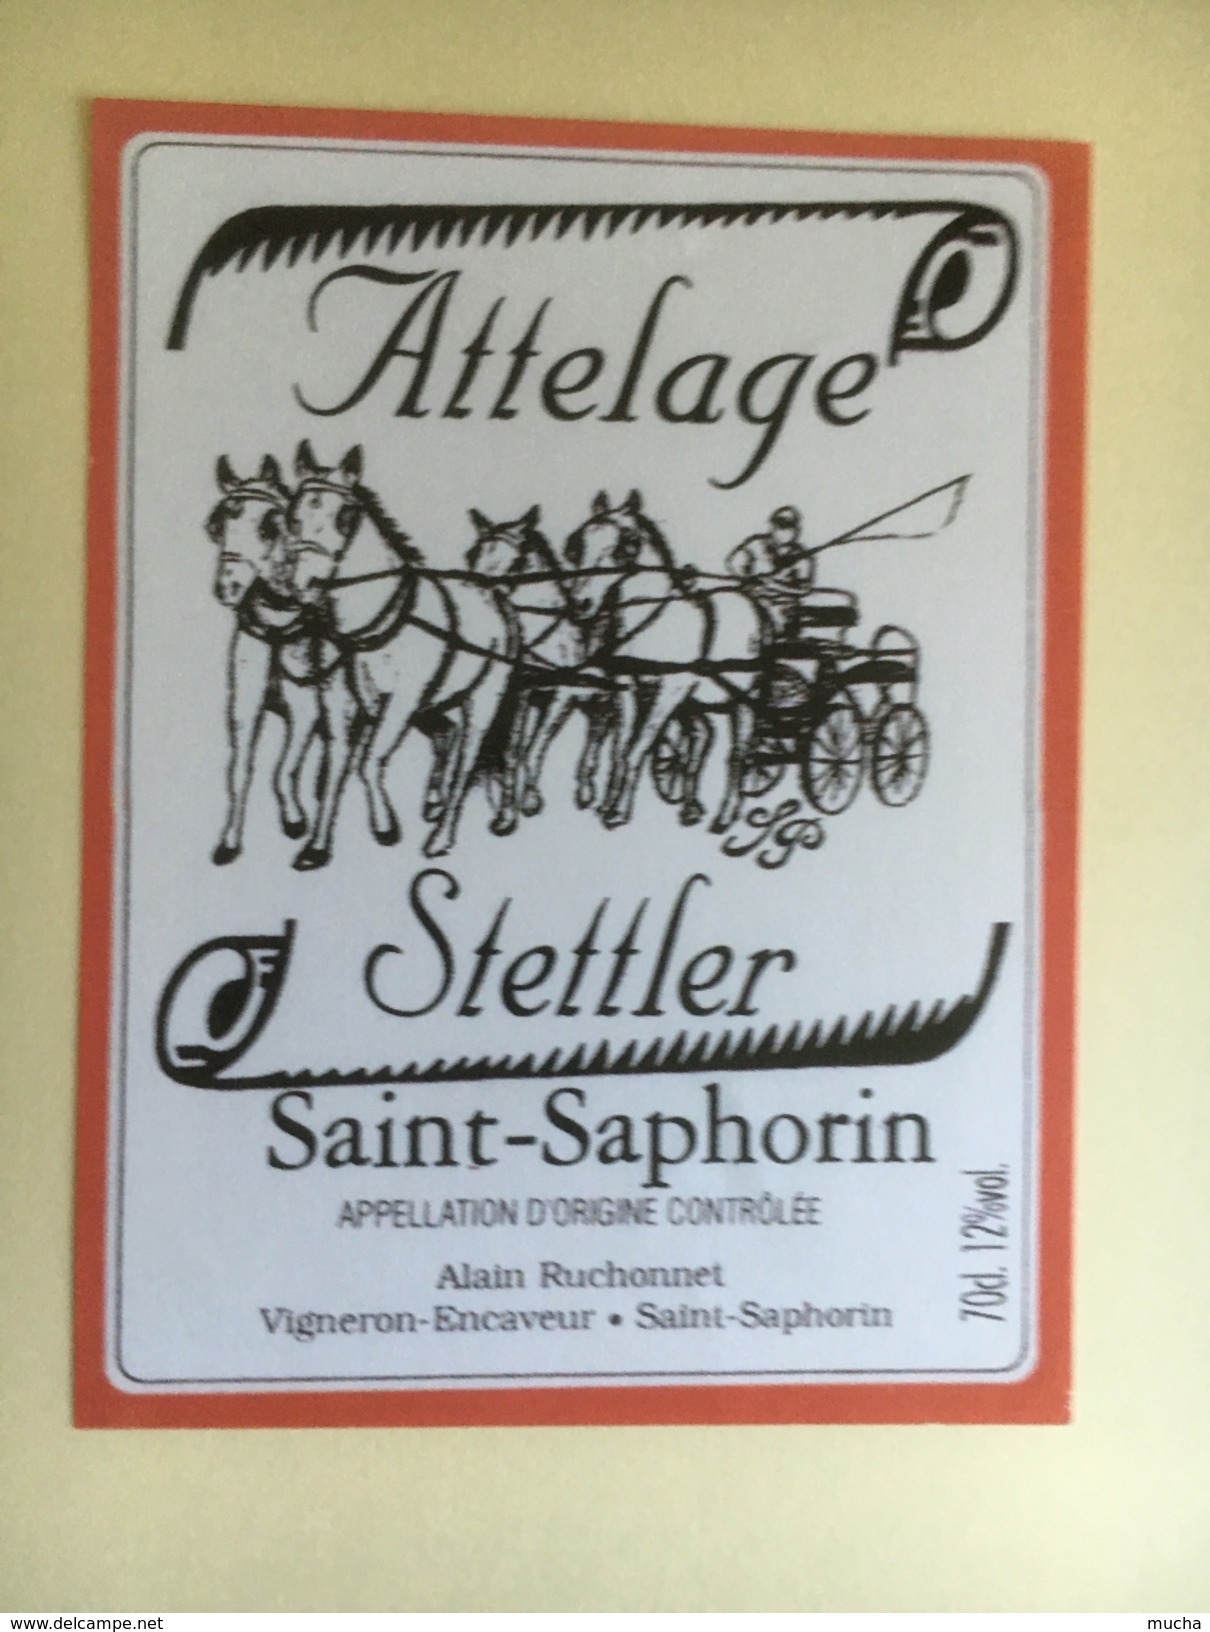 1211 - Suisse Saint-Saphorin Attelage Stettler - Horses